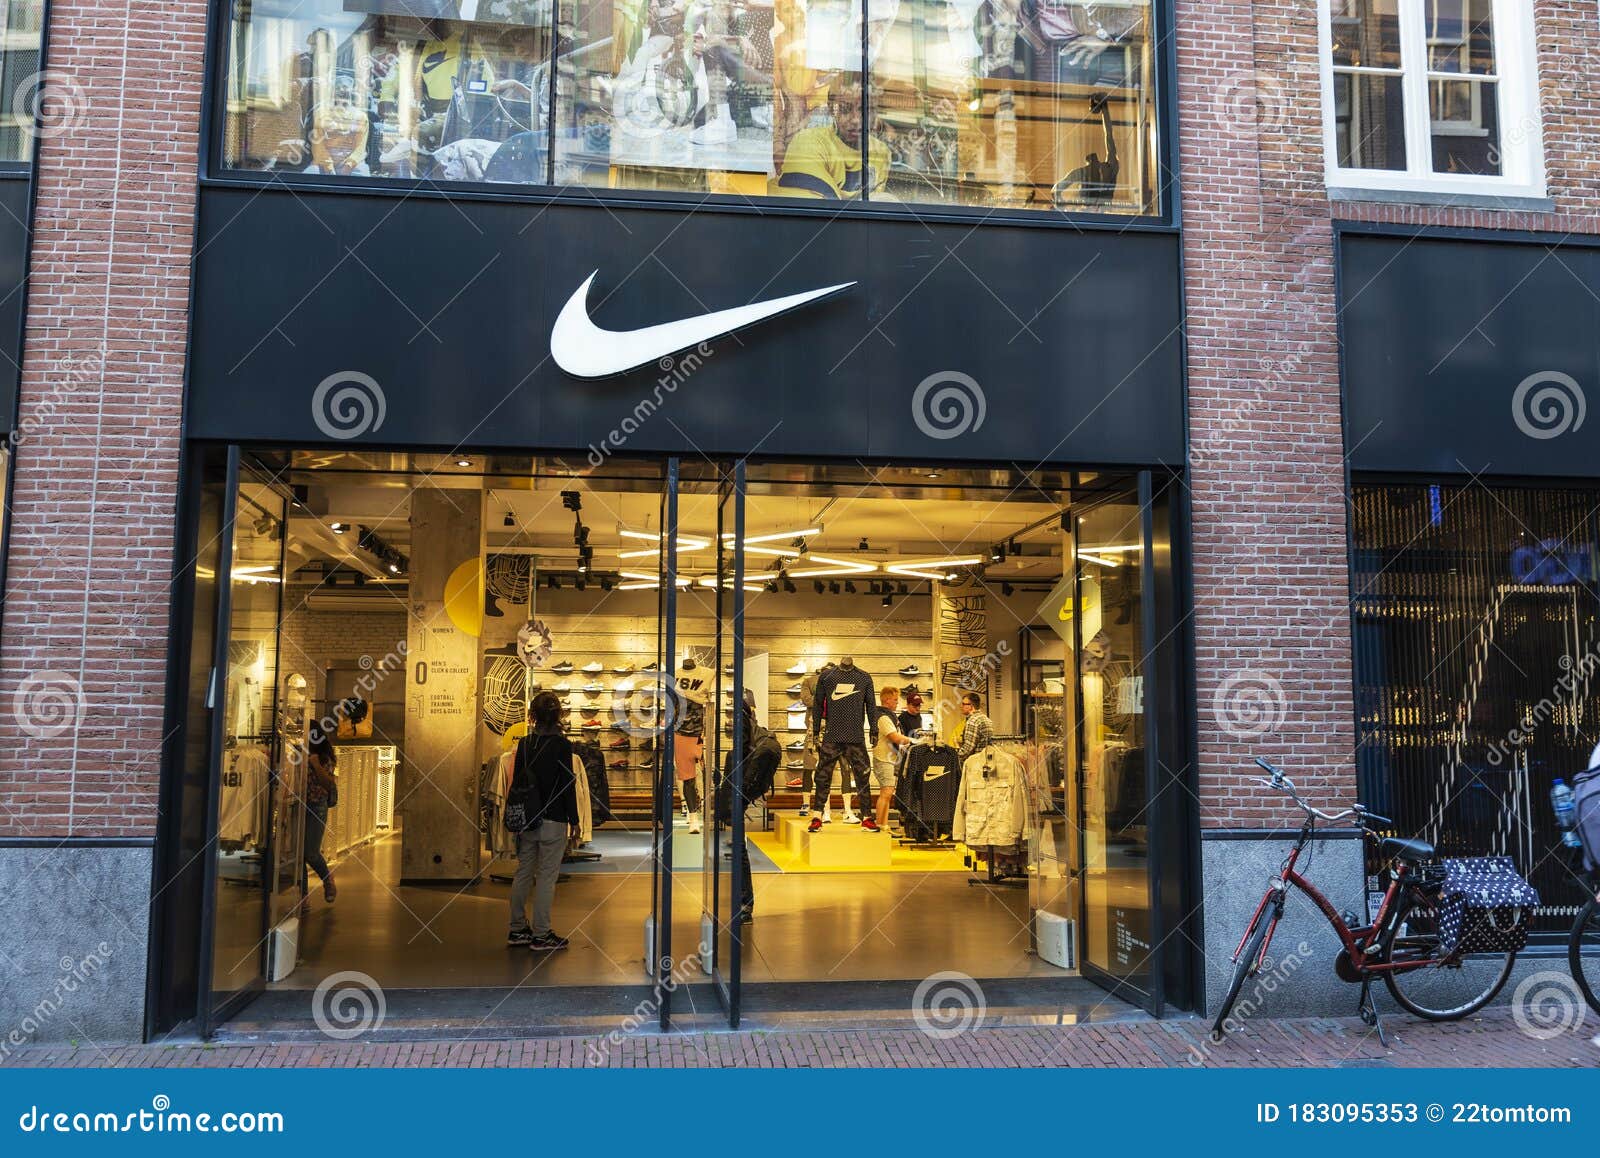 Stevig Vruchtbaar Bedrijfsomschrijving Nike - Sportwinkel in Amsterdam Nederland Redactionele Stock Foto - Image  of merk, nederland: 183095353